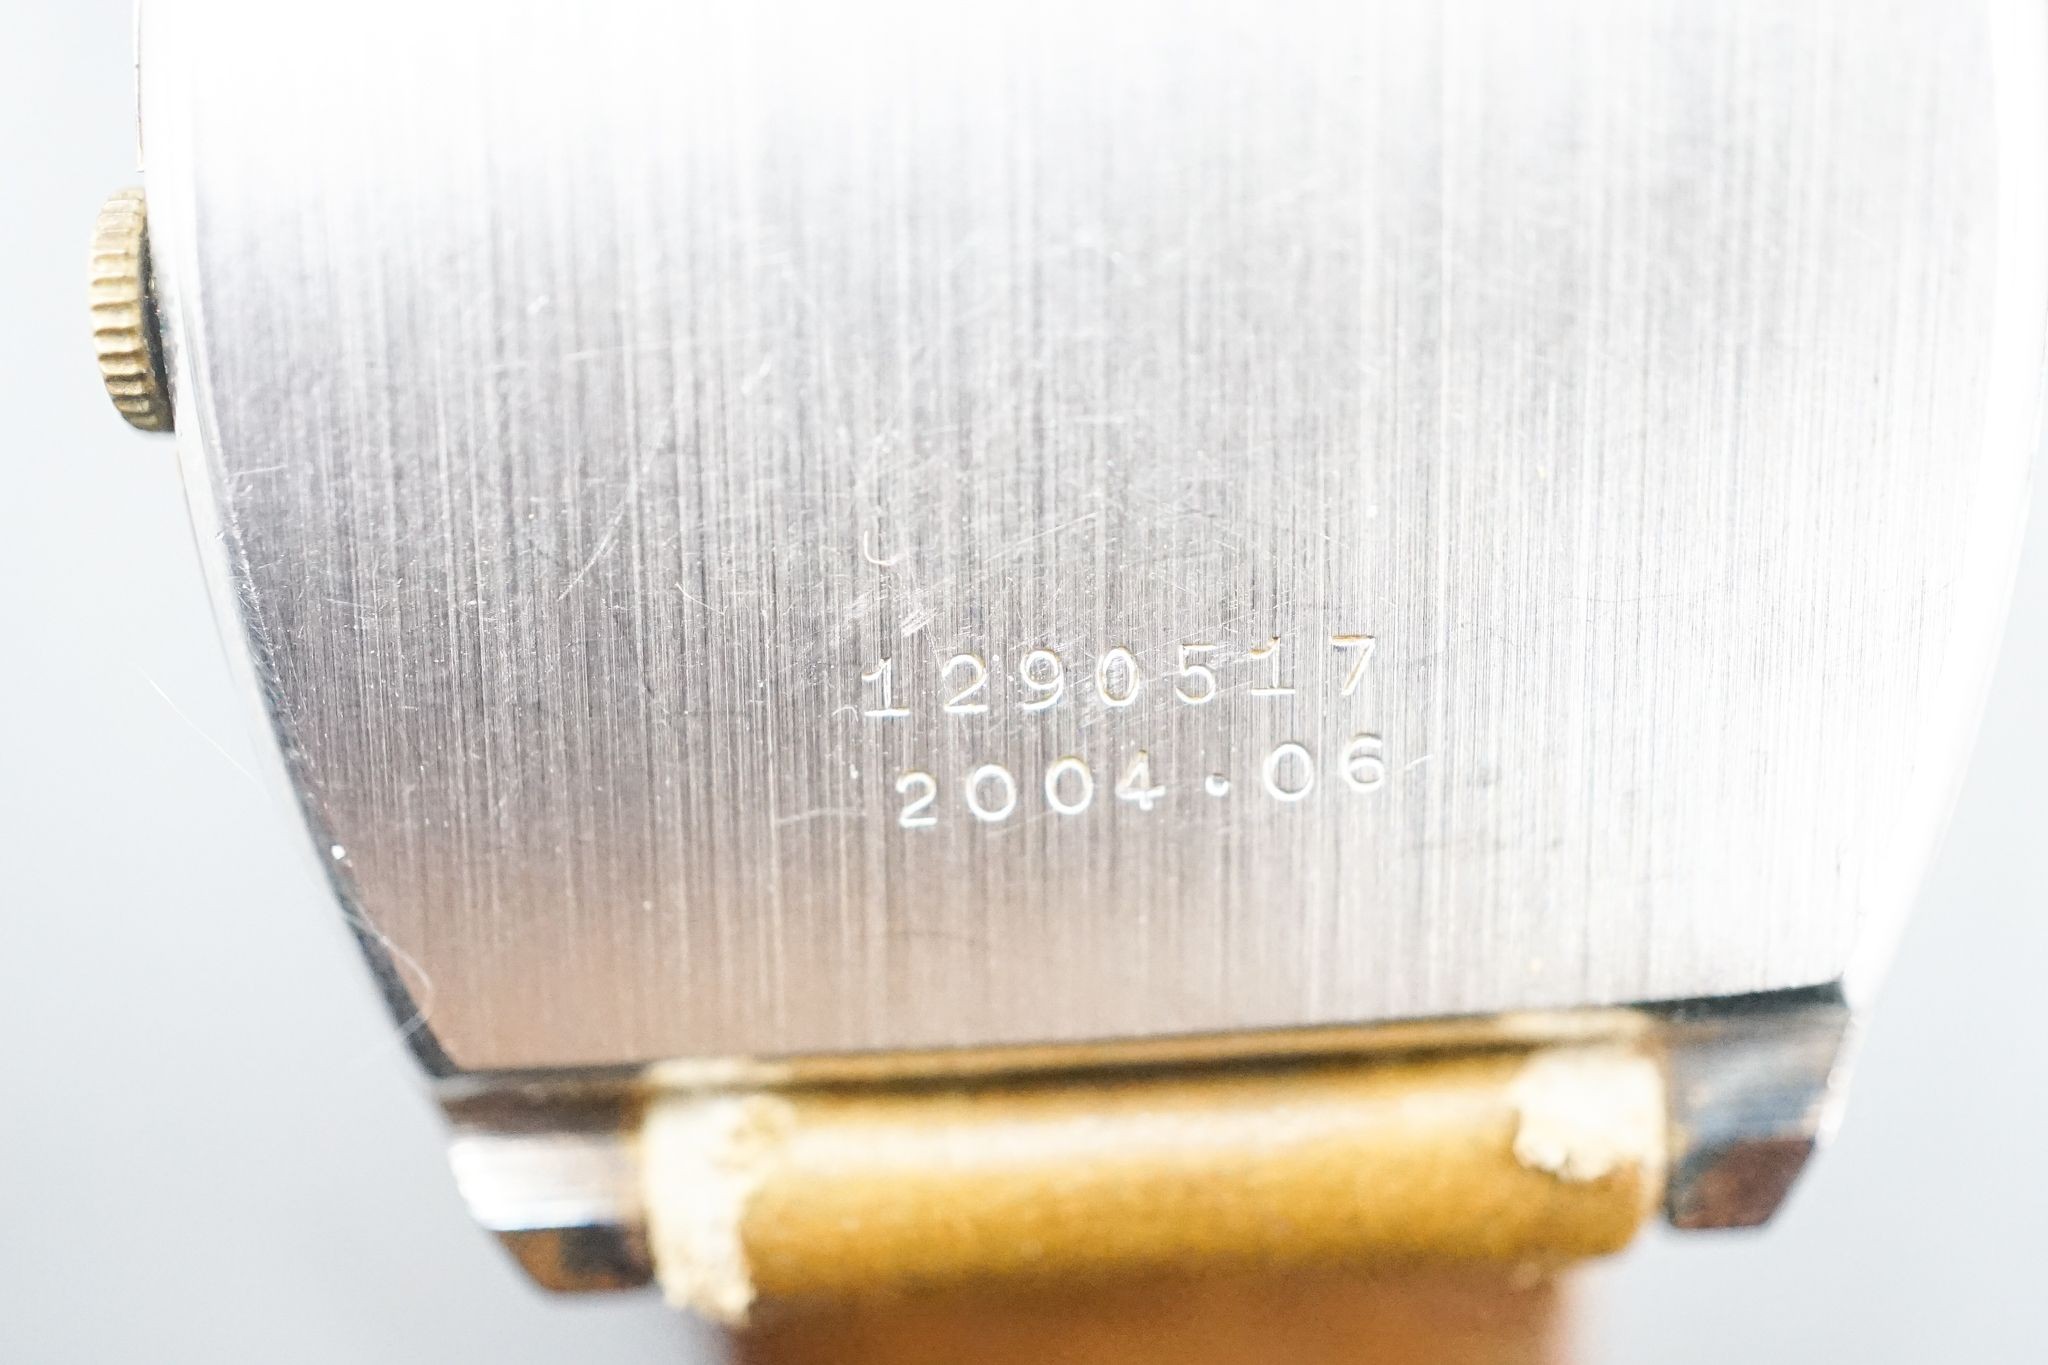 A gentleman's stainless steel Jaeger LeCoultre Club manual wind wrist watch, on associated strap, case diameter 32mm.